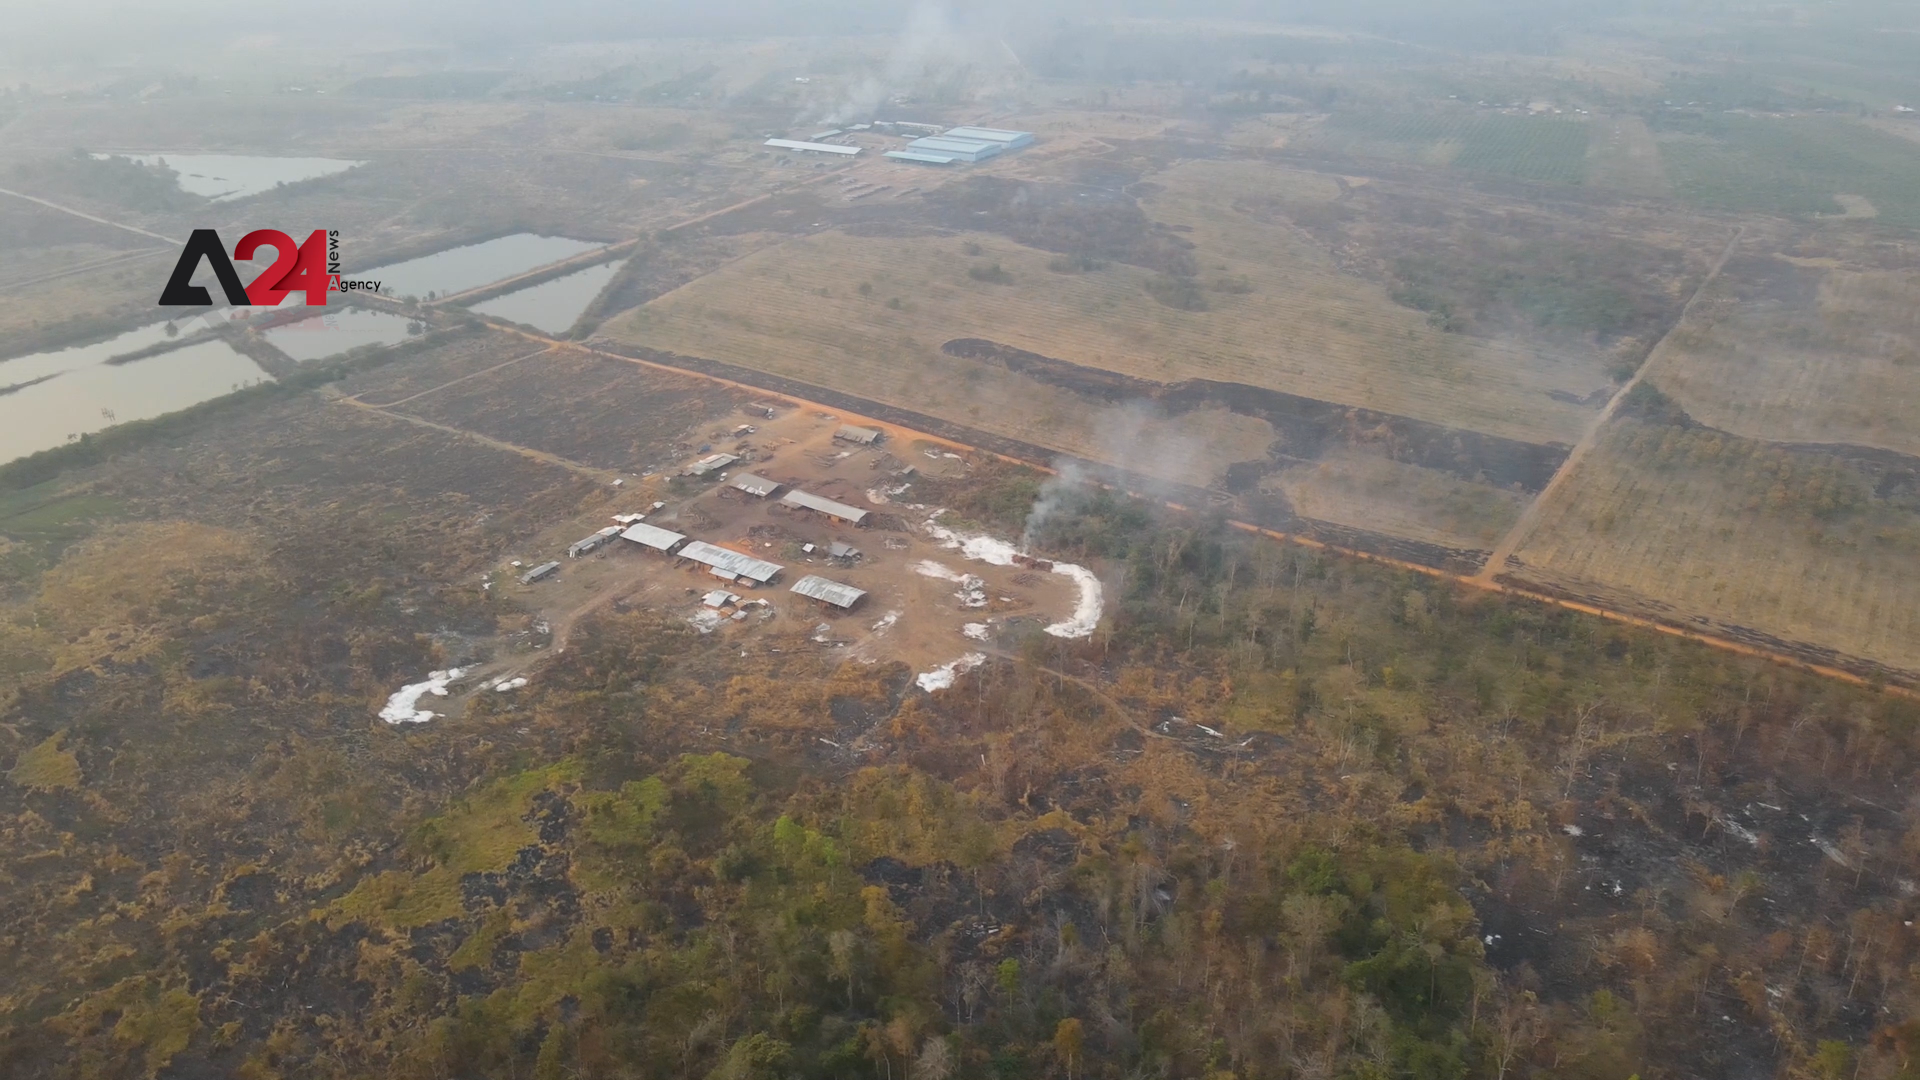 Cambodia – Foreign logging company warehouses pose threat to ethnic minority, wildlife